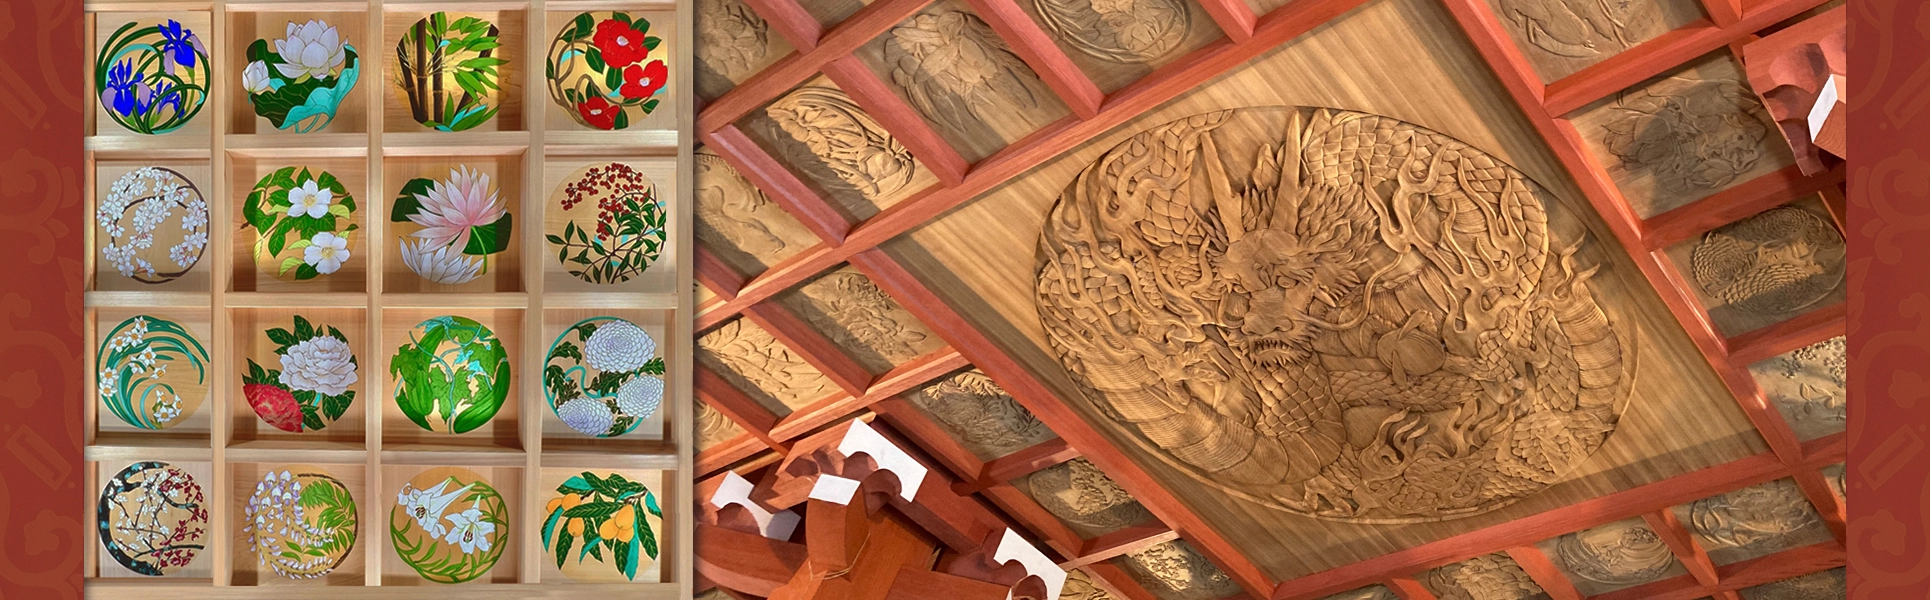 大興寺の本堂天井彫刻